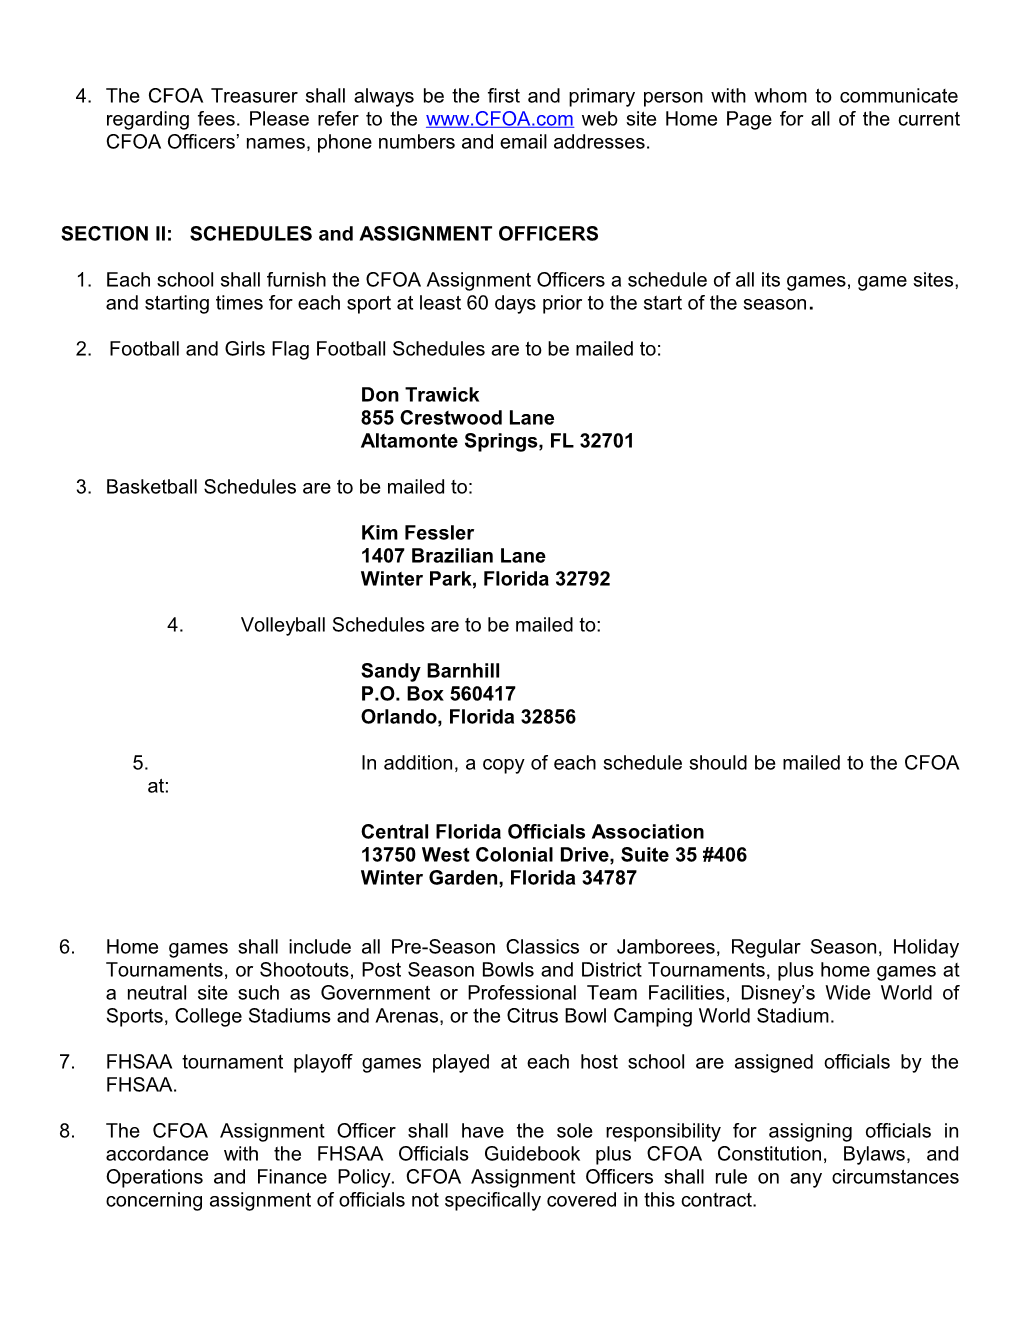 Central Florida Officials Association, Inc